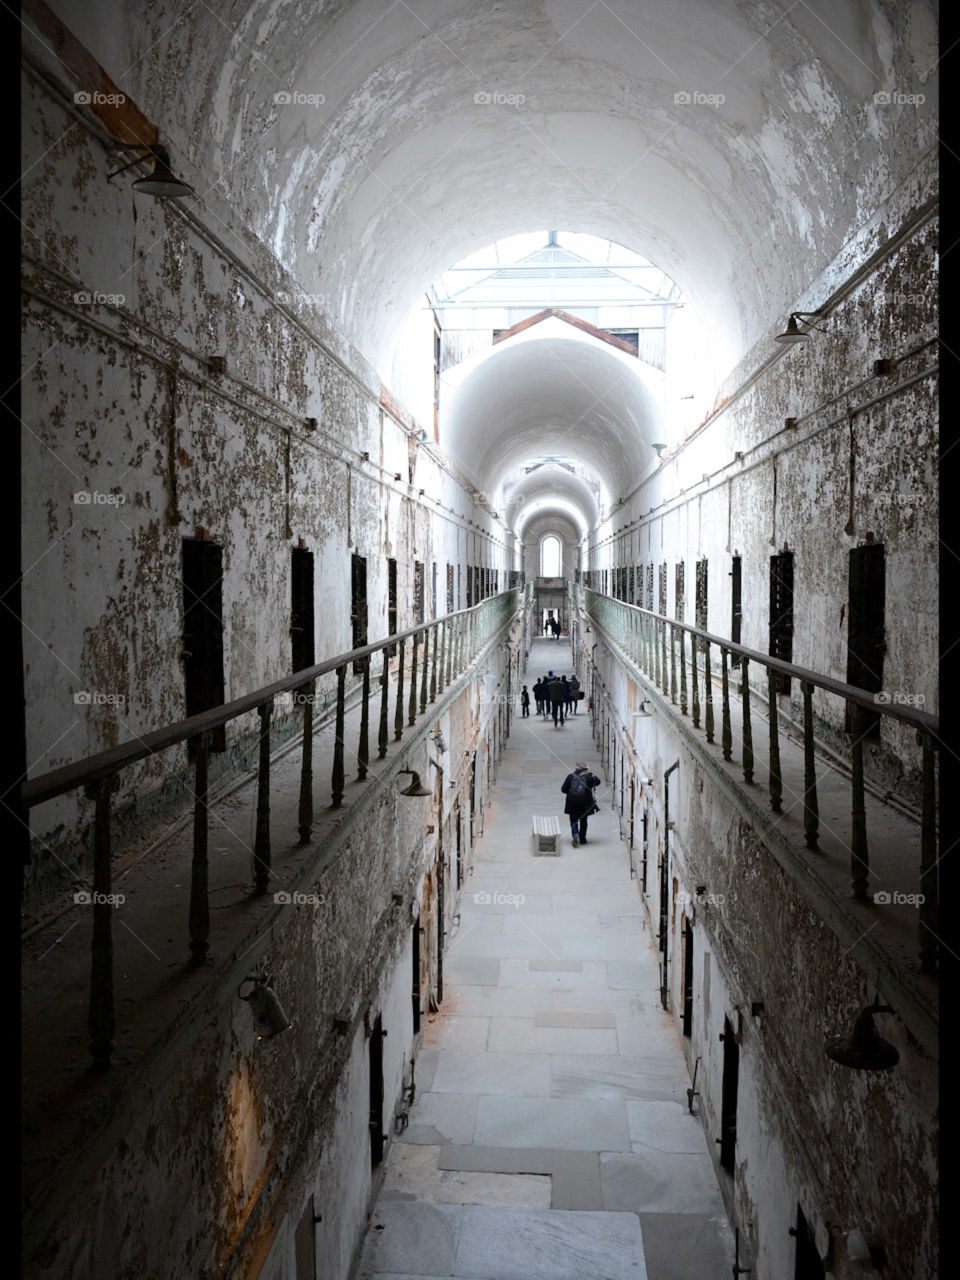 Eastern State Penitentiary located in Philadelphia